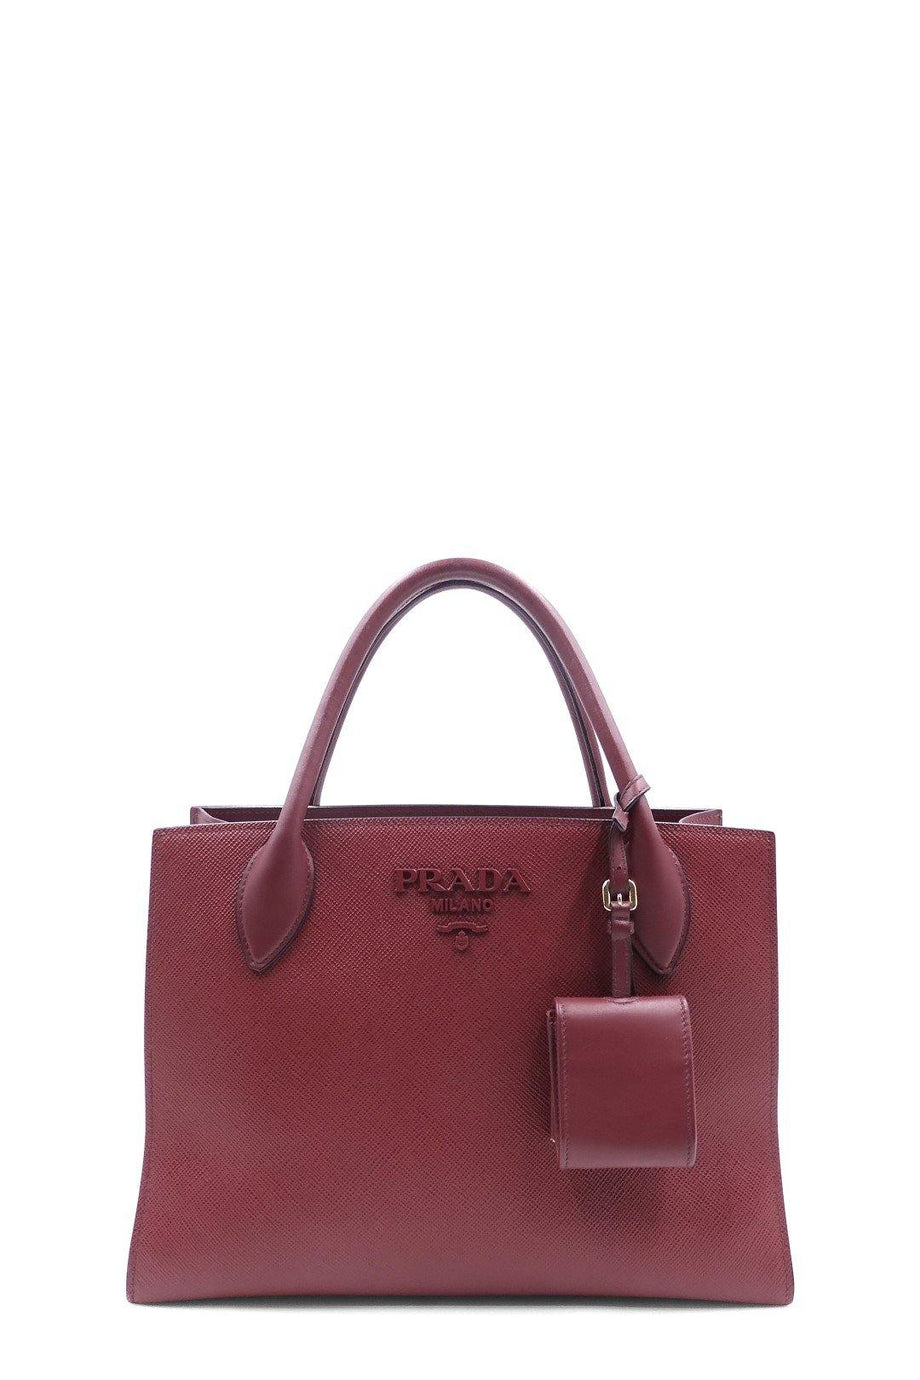 Prada Monochrome Saffiano Leather Bag (Varied Colors)